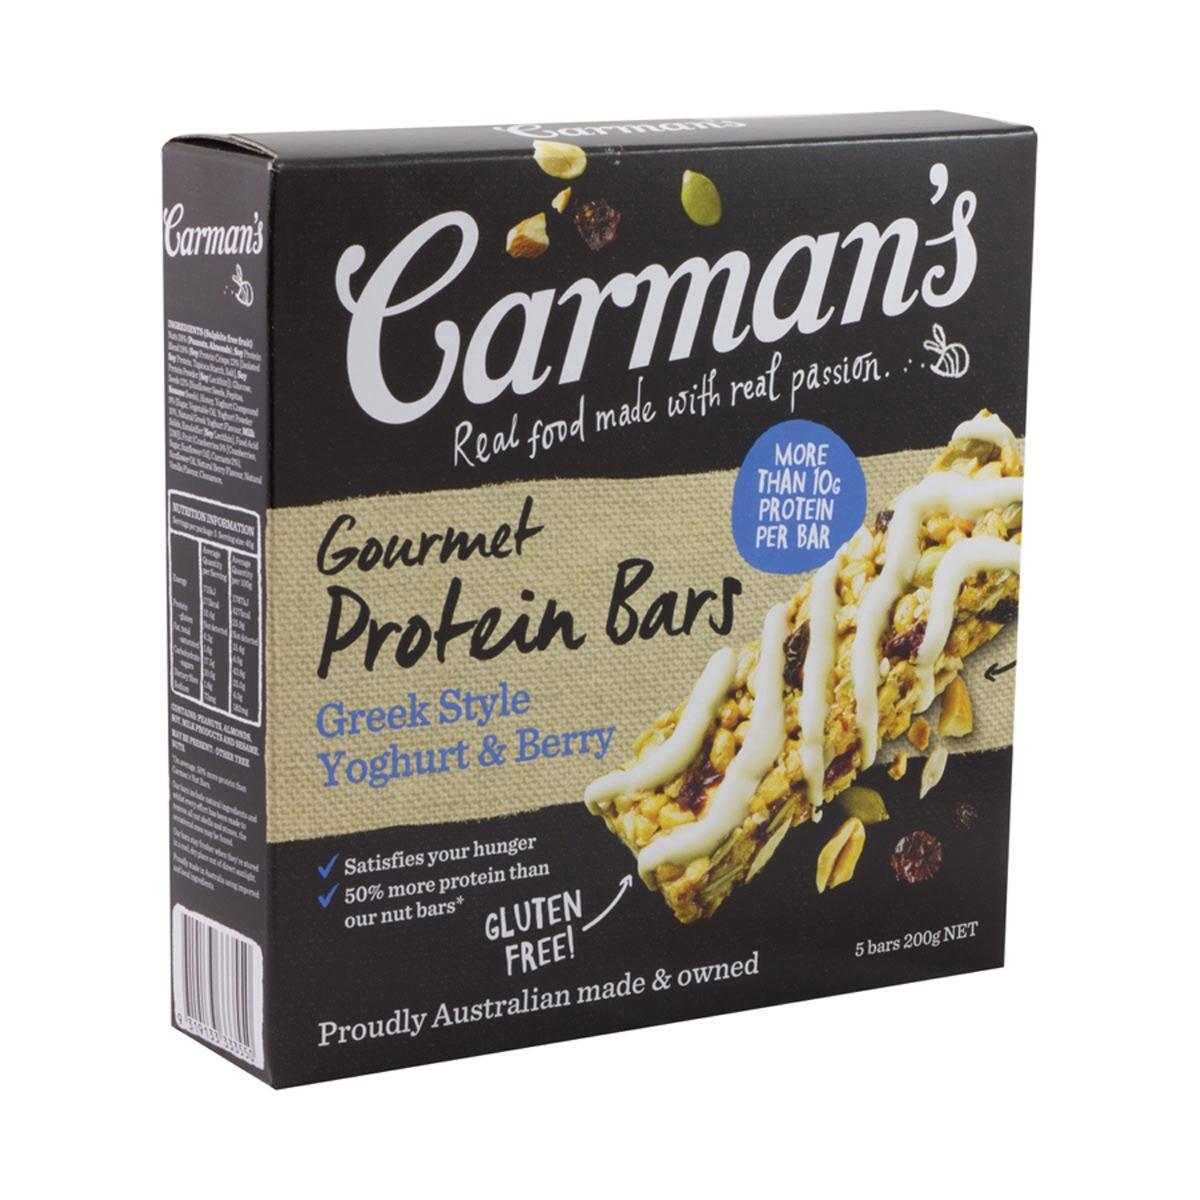 Carmans Yoghurt & Berry Protein Bar 6 Pack